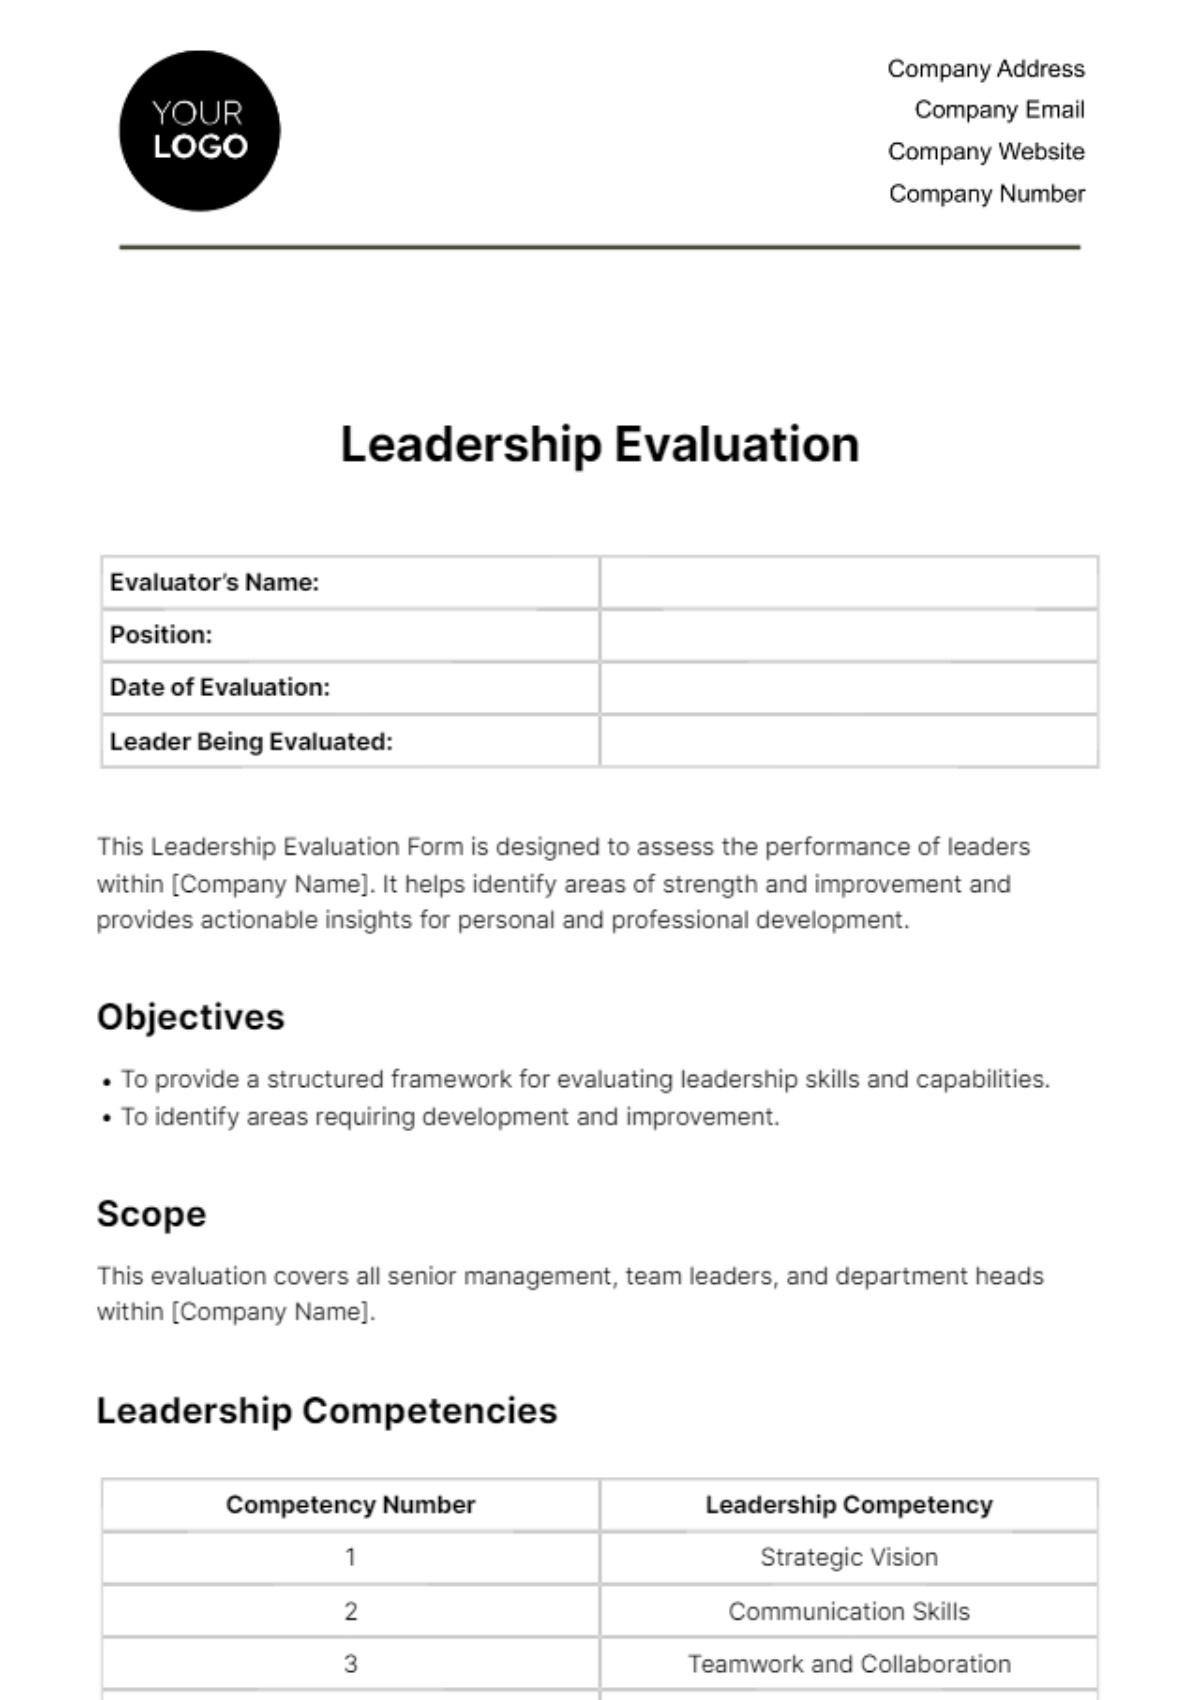 Leadership Evaluation HR Template